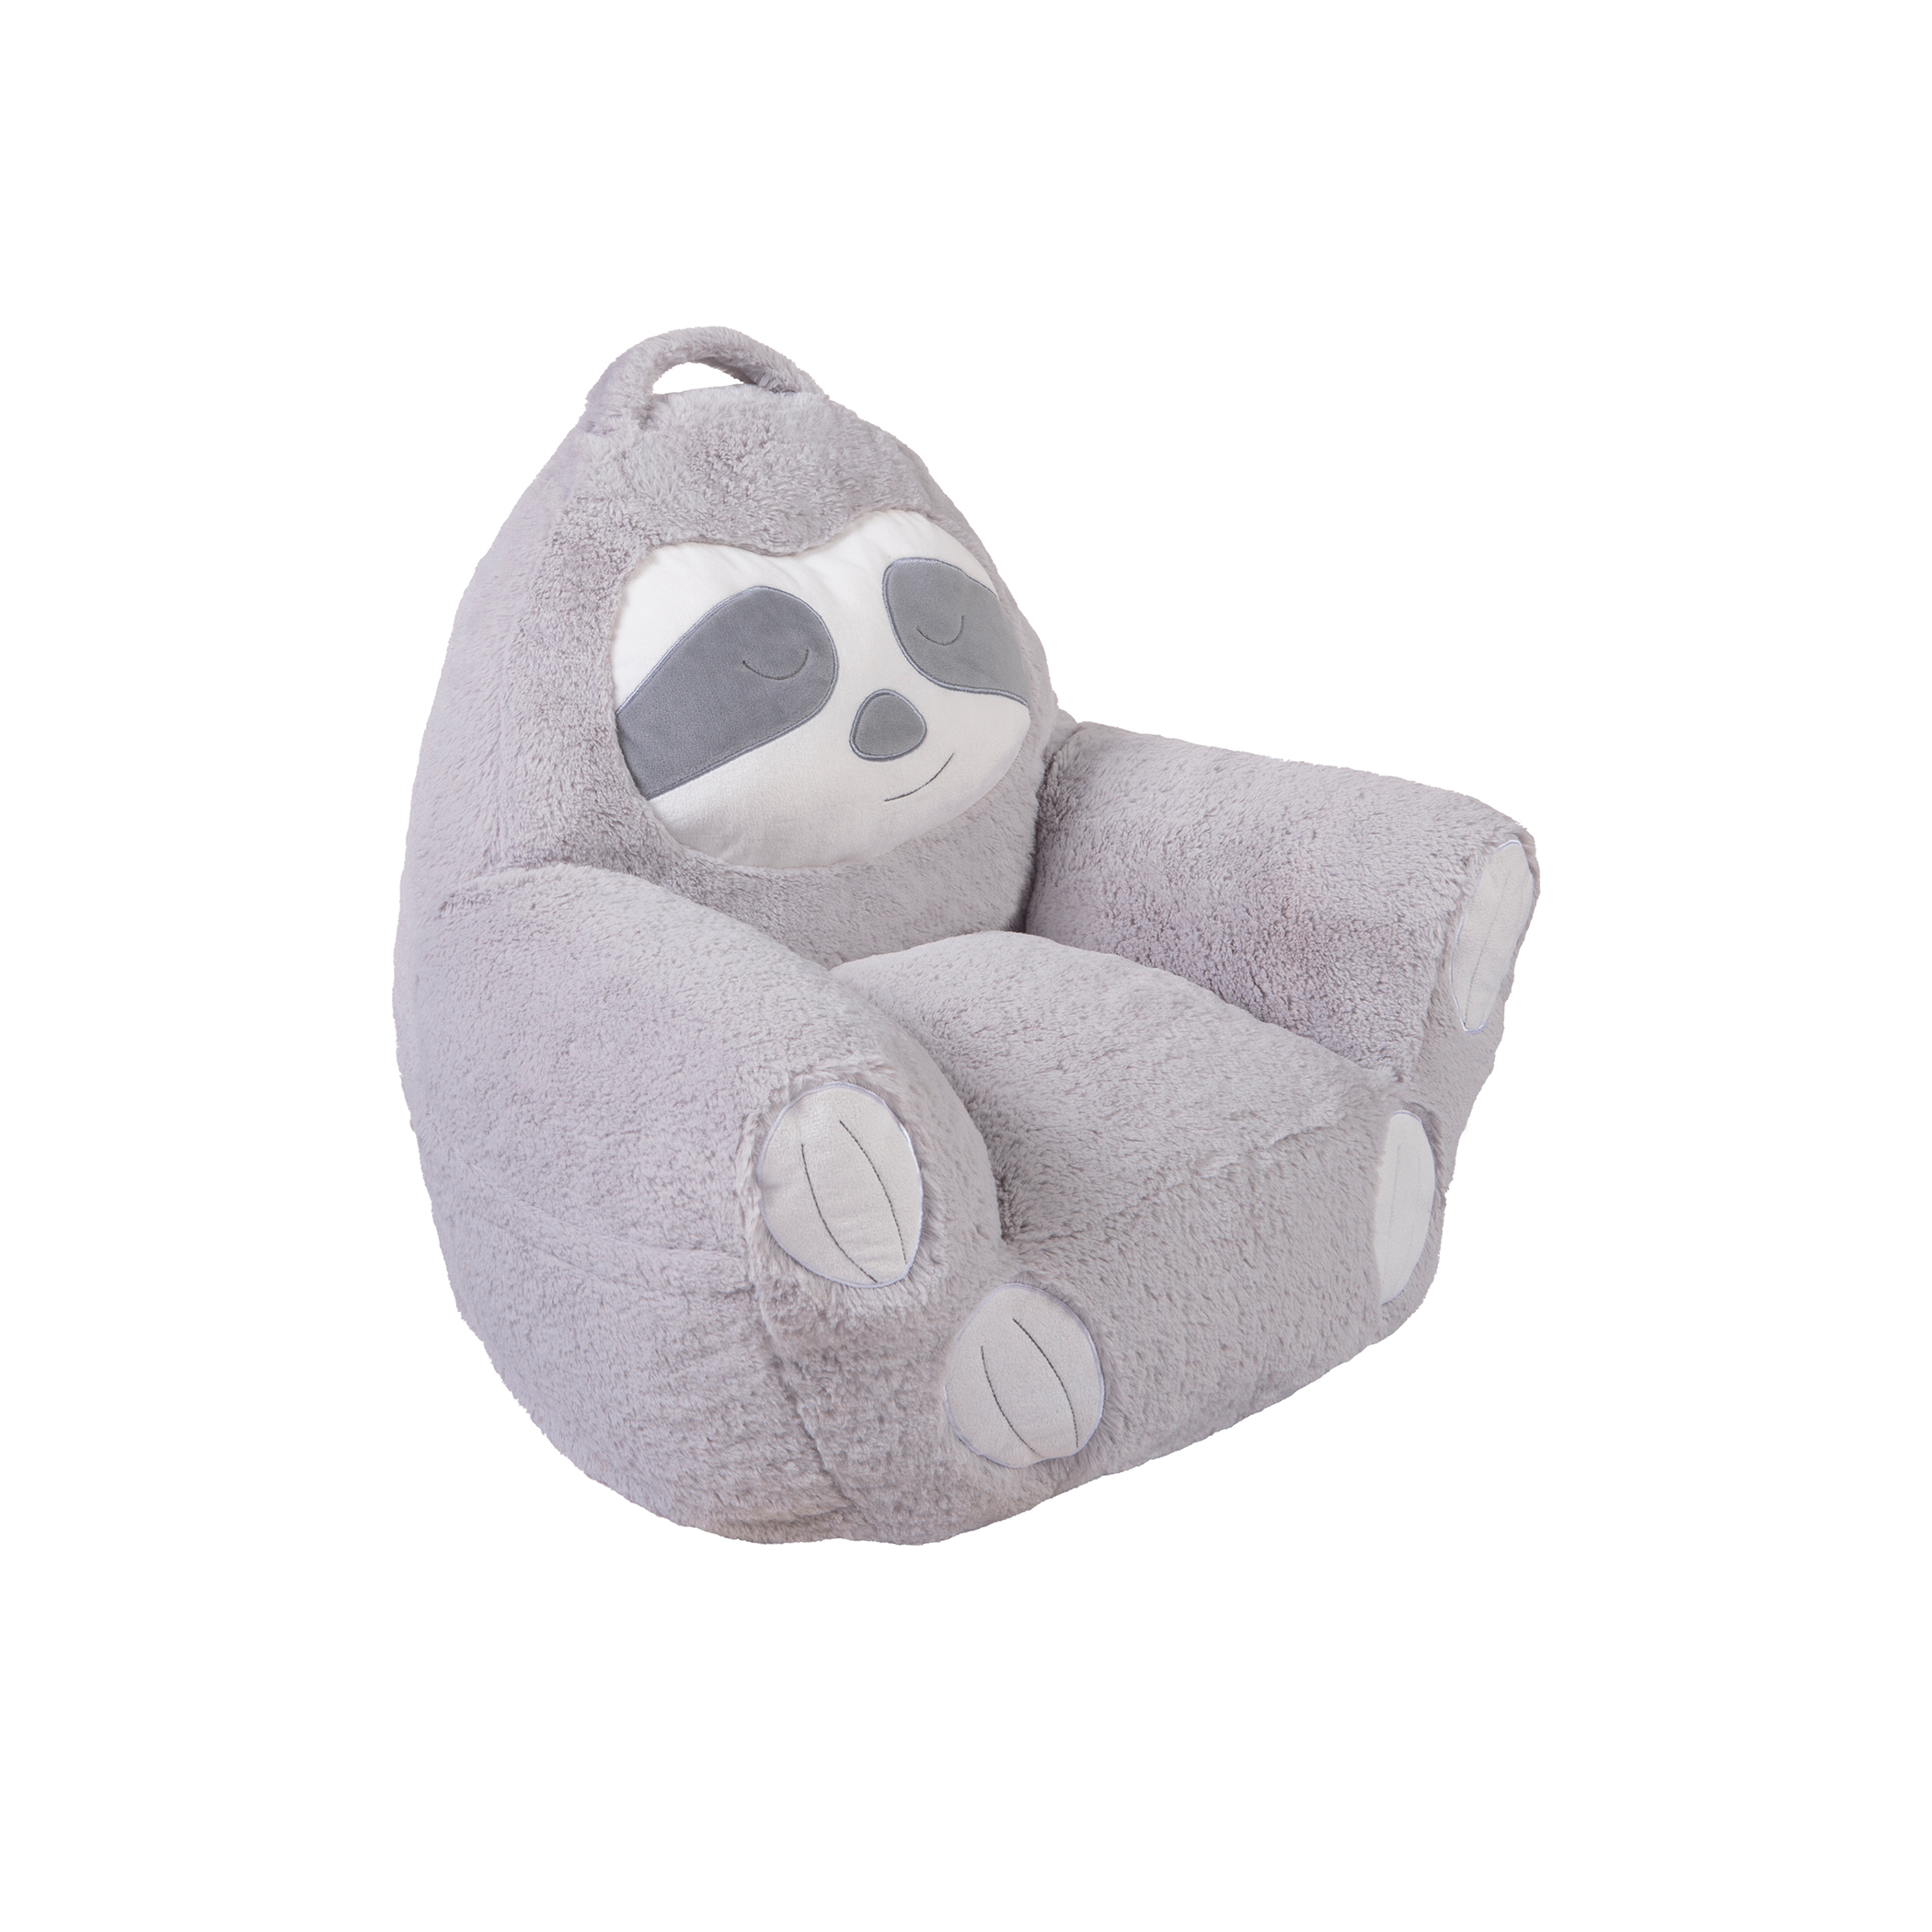 Cuddo Buddies Gray Sloth Plush Character Chair - image 2 of 14